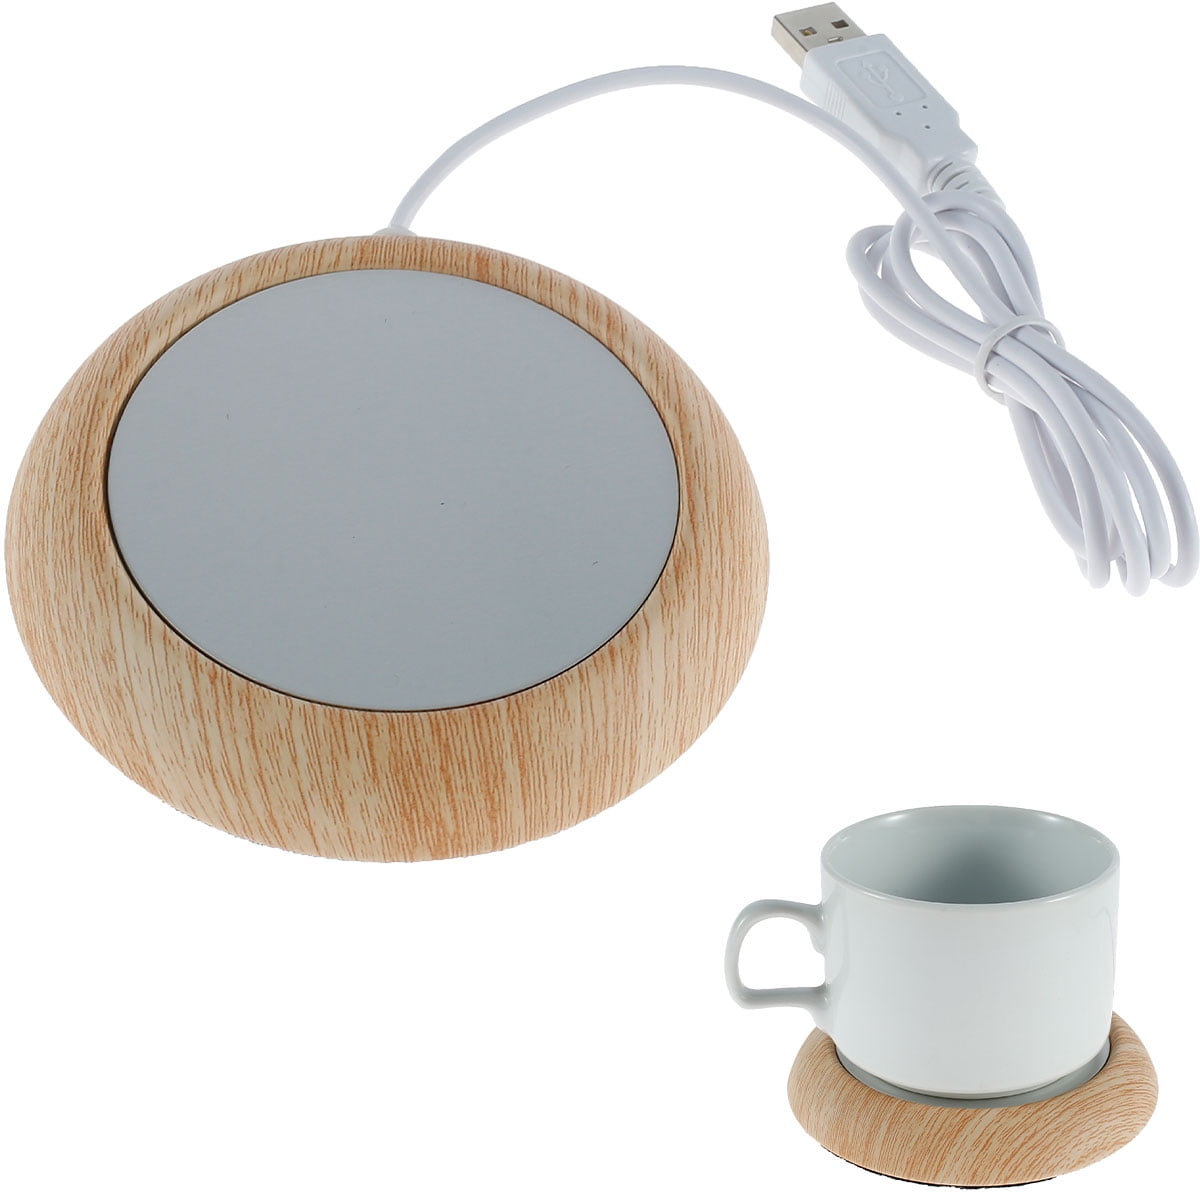 USB Wood Grain Cup Warmer Heat Beverage Mug Mat Home Office Desktop Heated  Coffee Tea Mug Pad(Black)